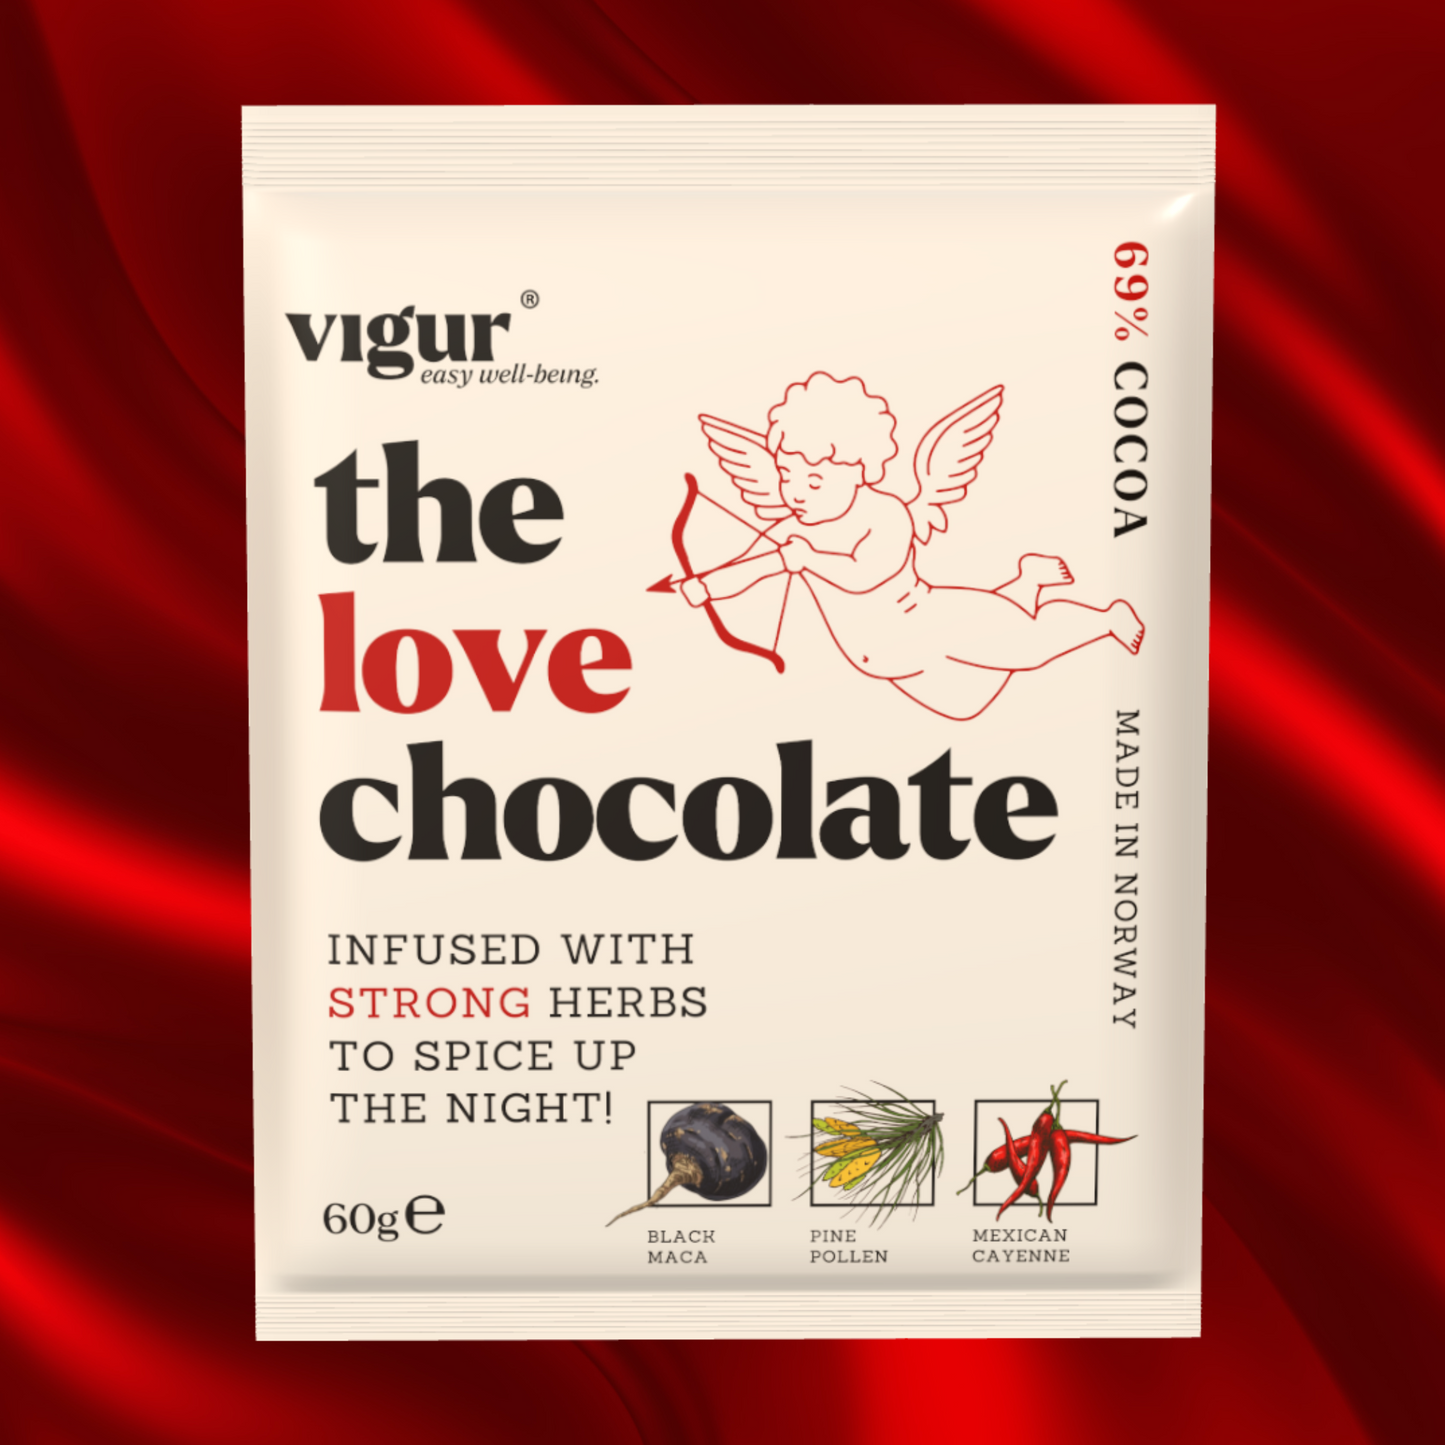 THE LOVE CHOCOLATE - Økt lyst & nytelse